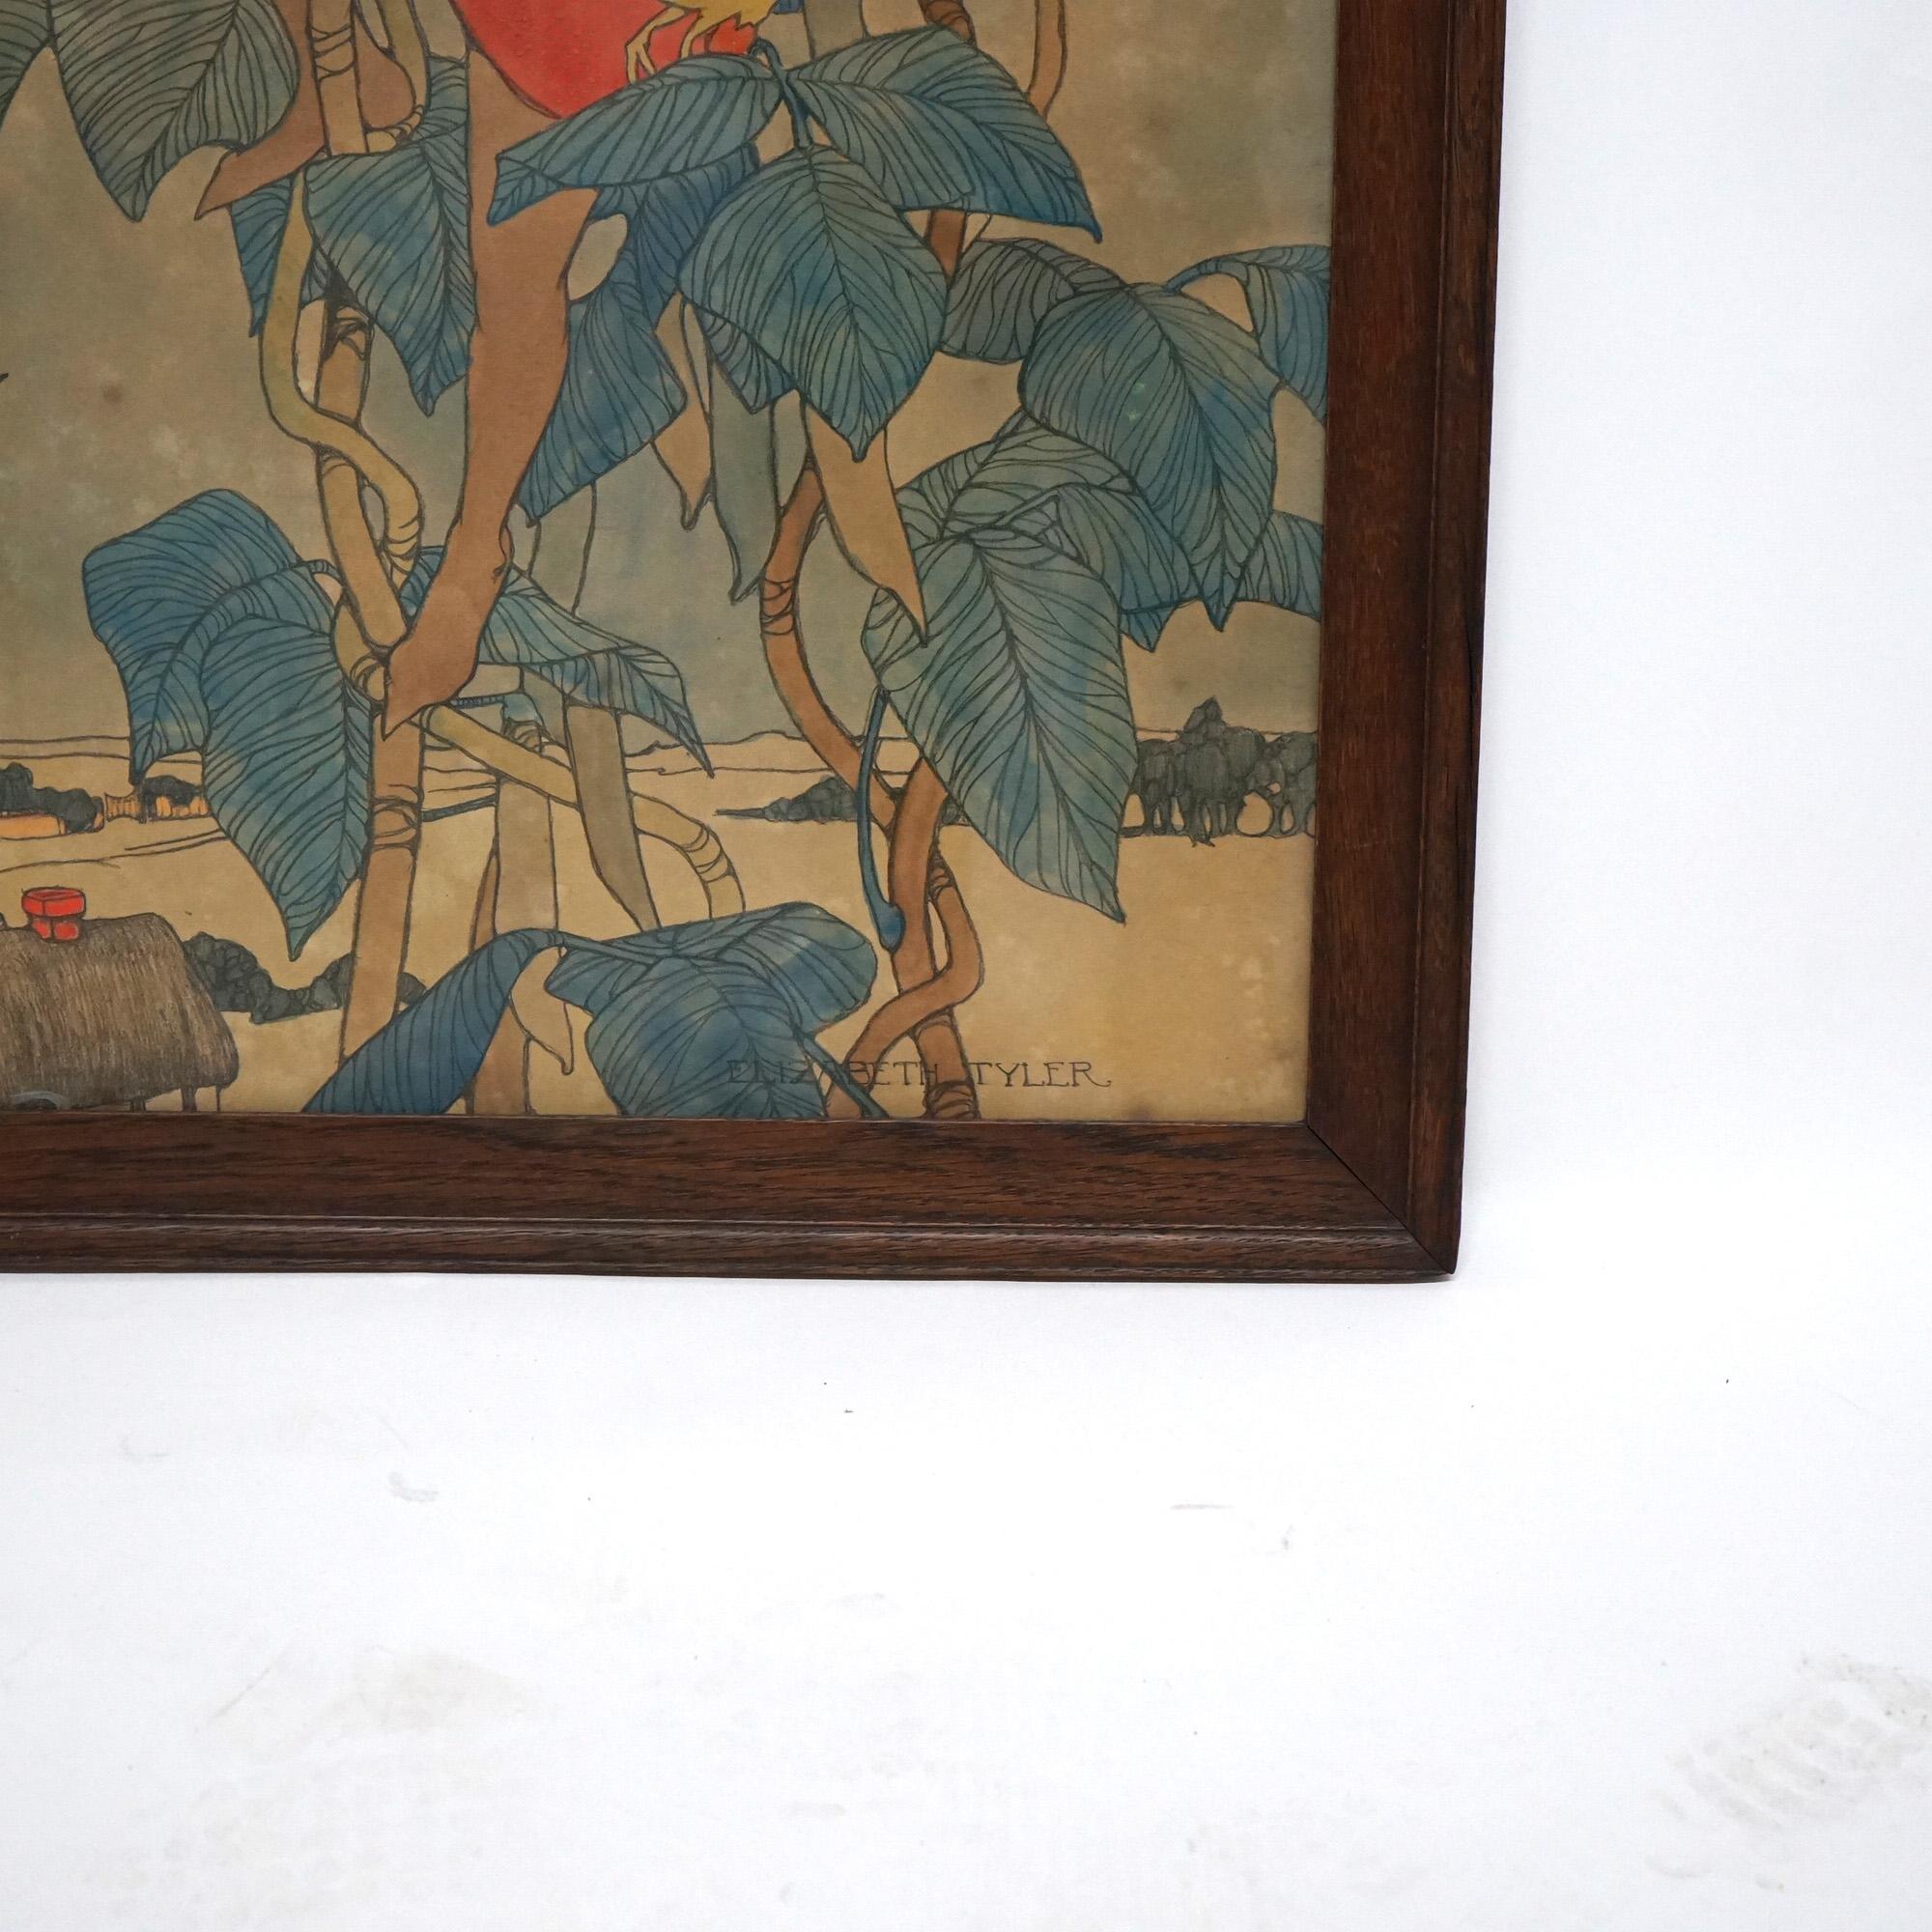 Antique Elizabeth Tyler Lithograph “Jack And The Beanstalk”, Framed, C1920 For Sale 2